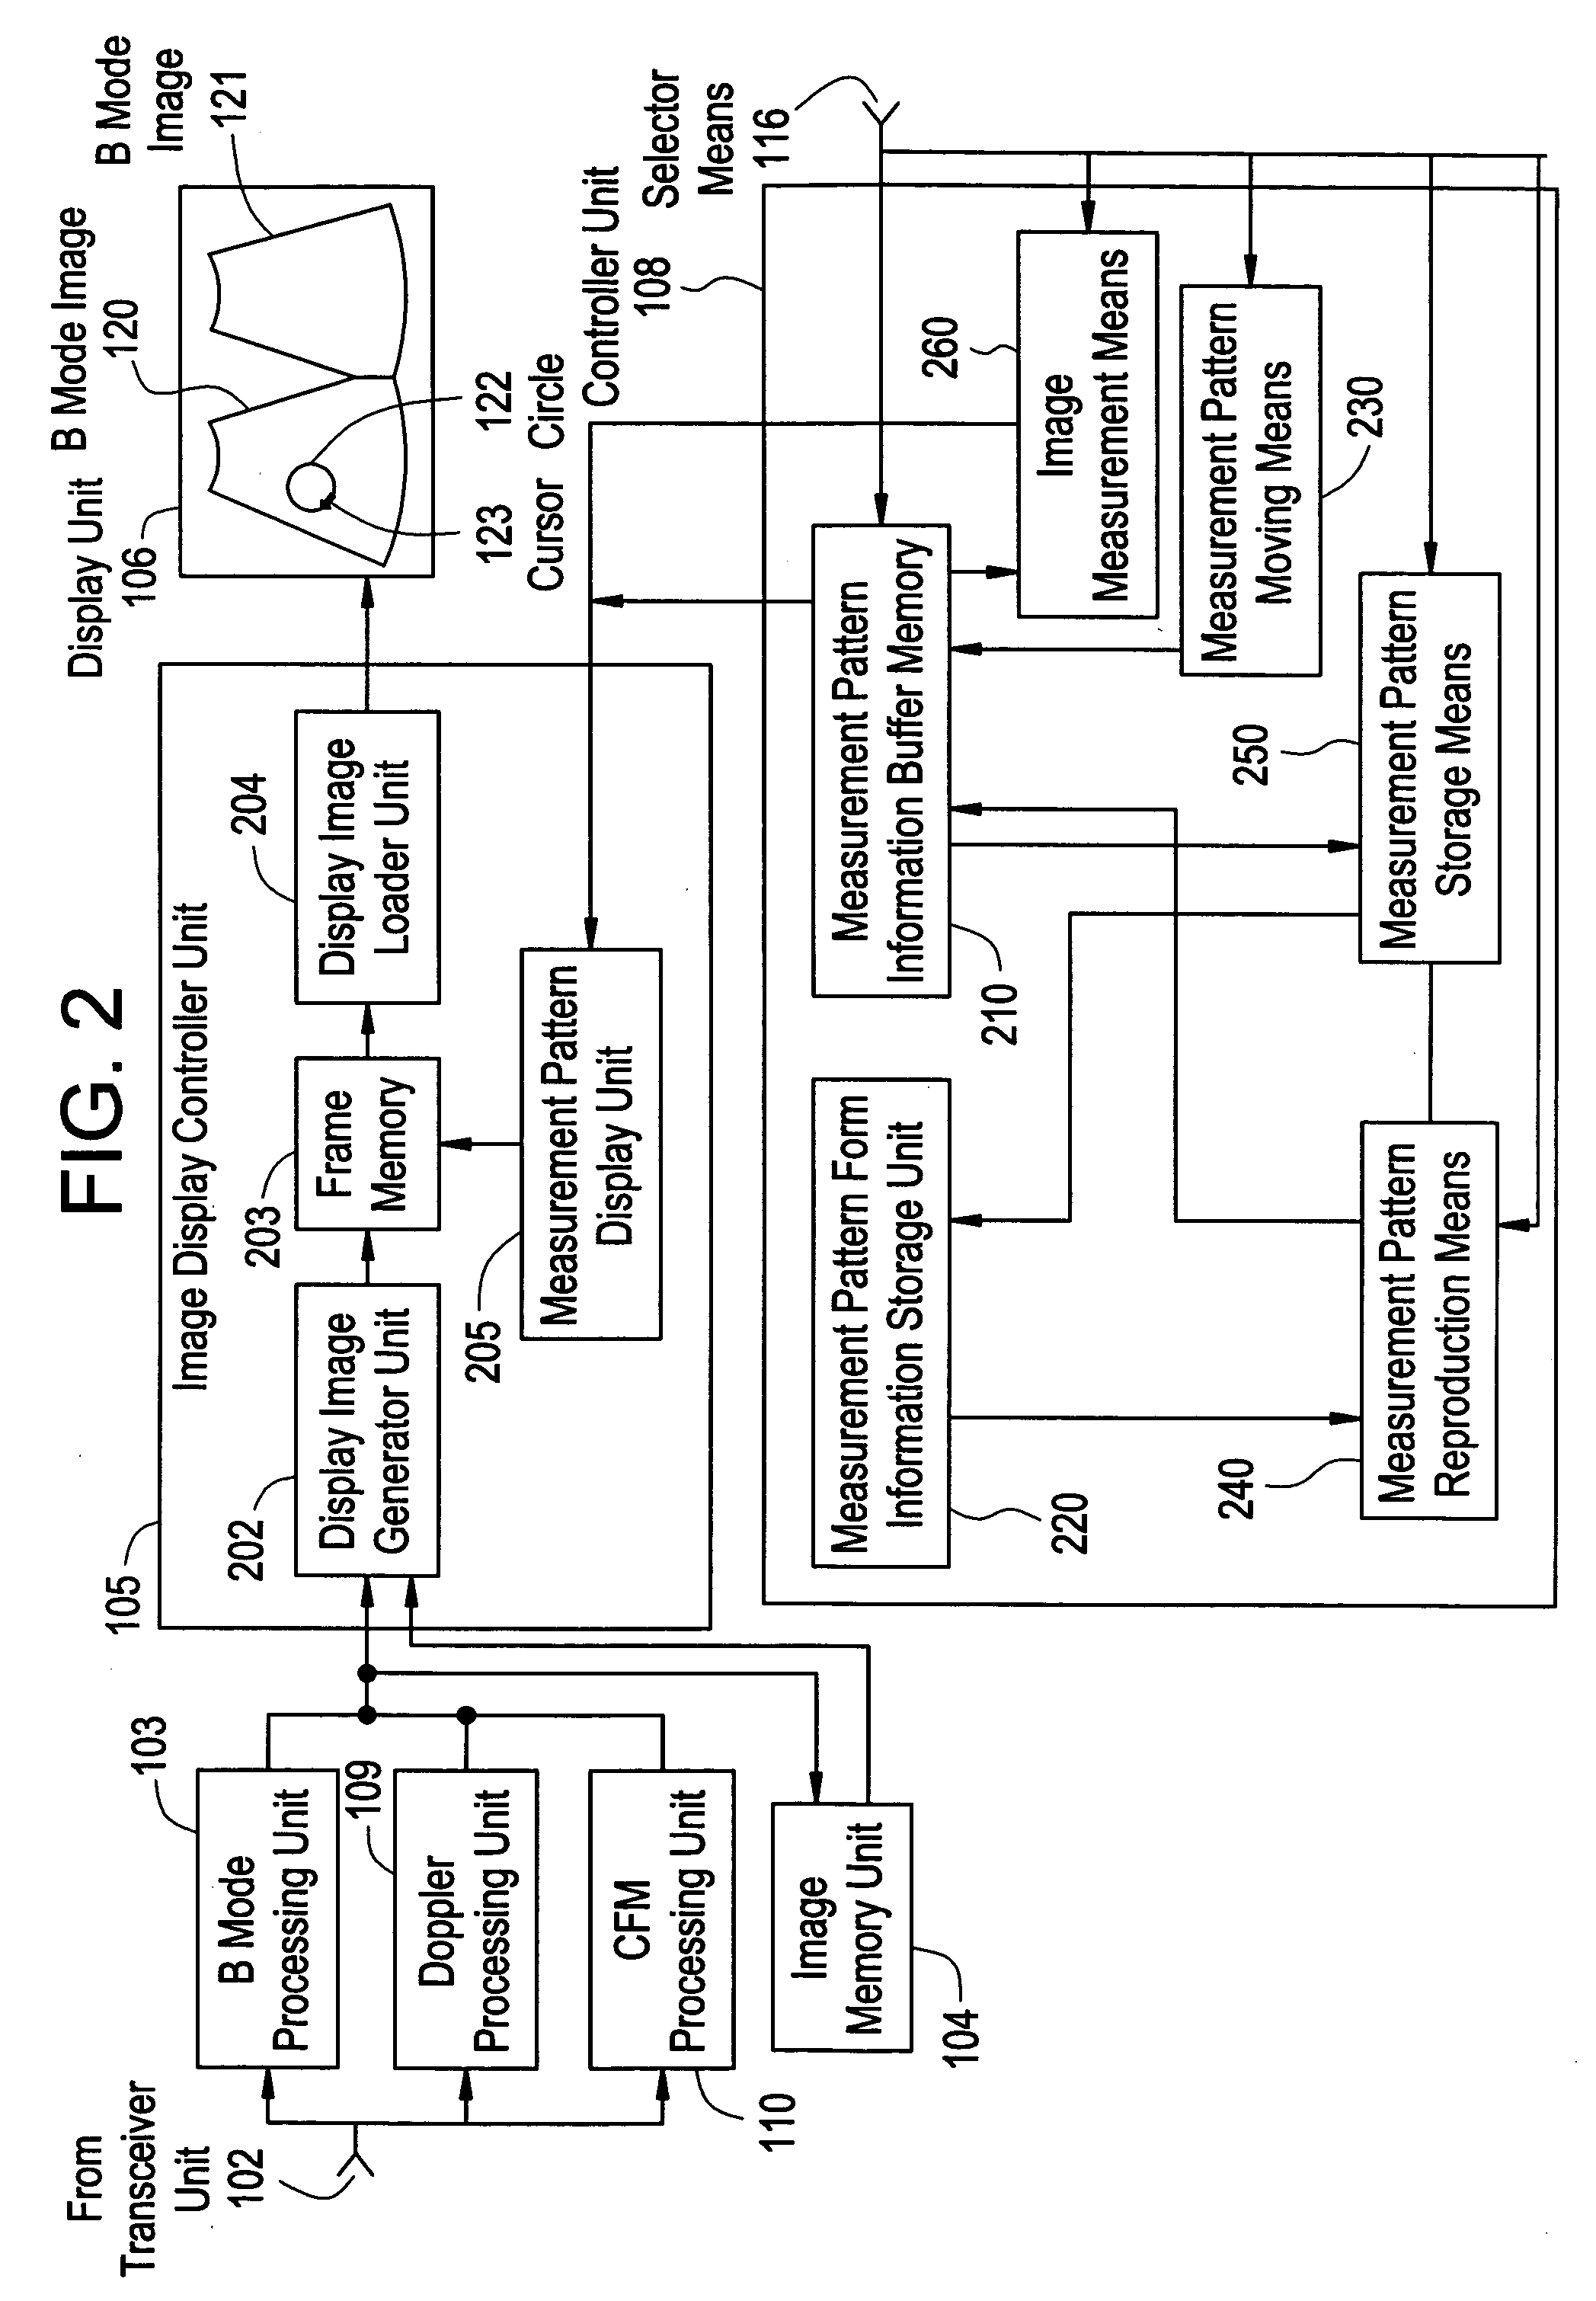 Ultrasonic imaging apparatus